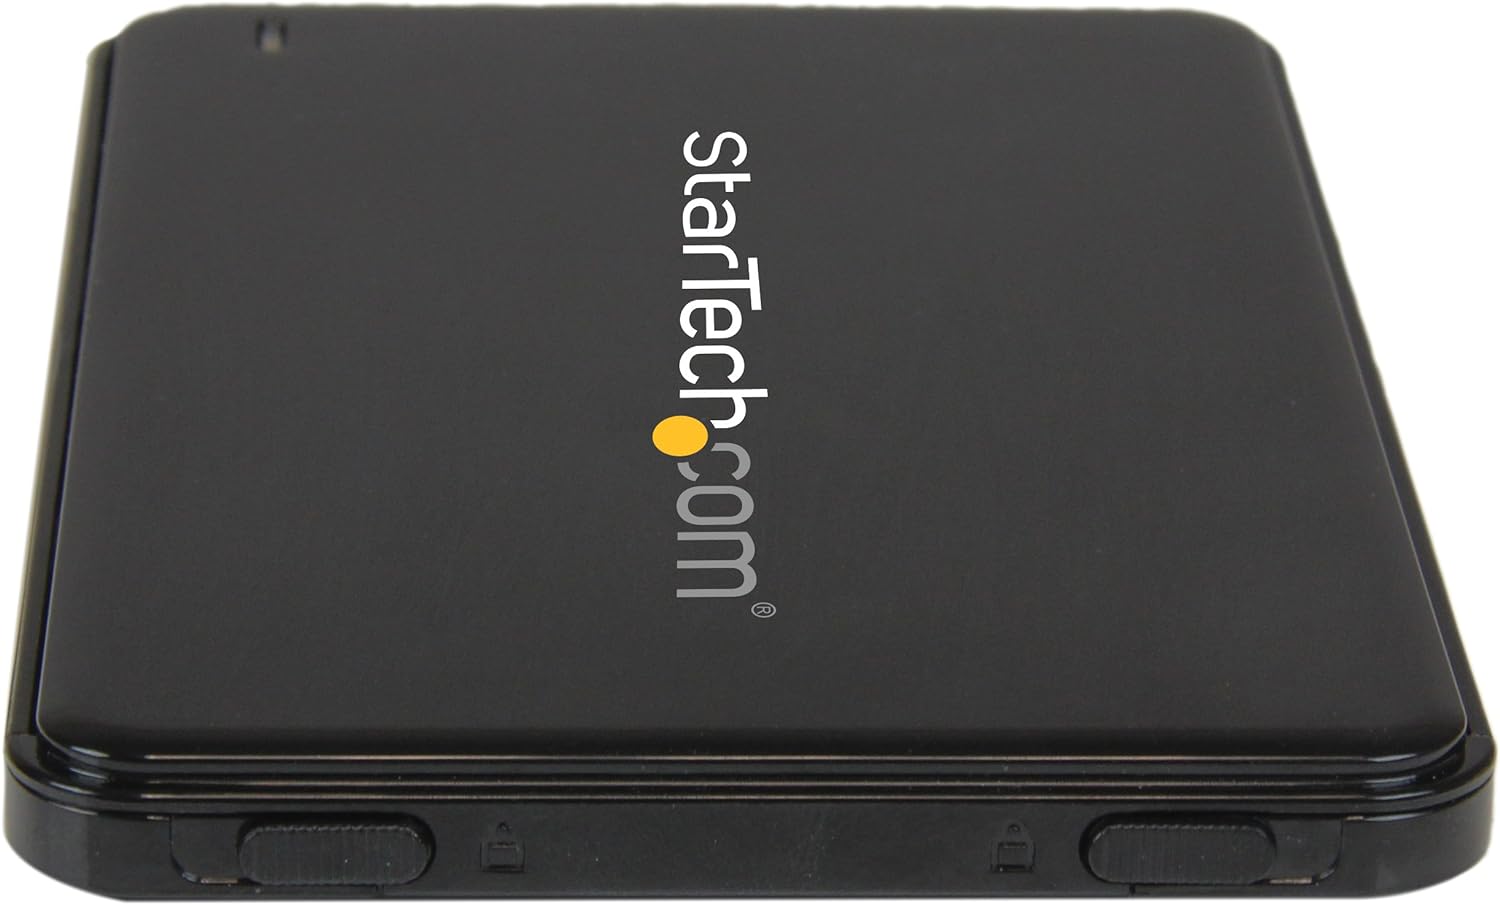 Startech 3.5in USB 3.0 External SATA Hard Drive Enclosure w/ UASP - Black